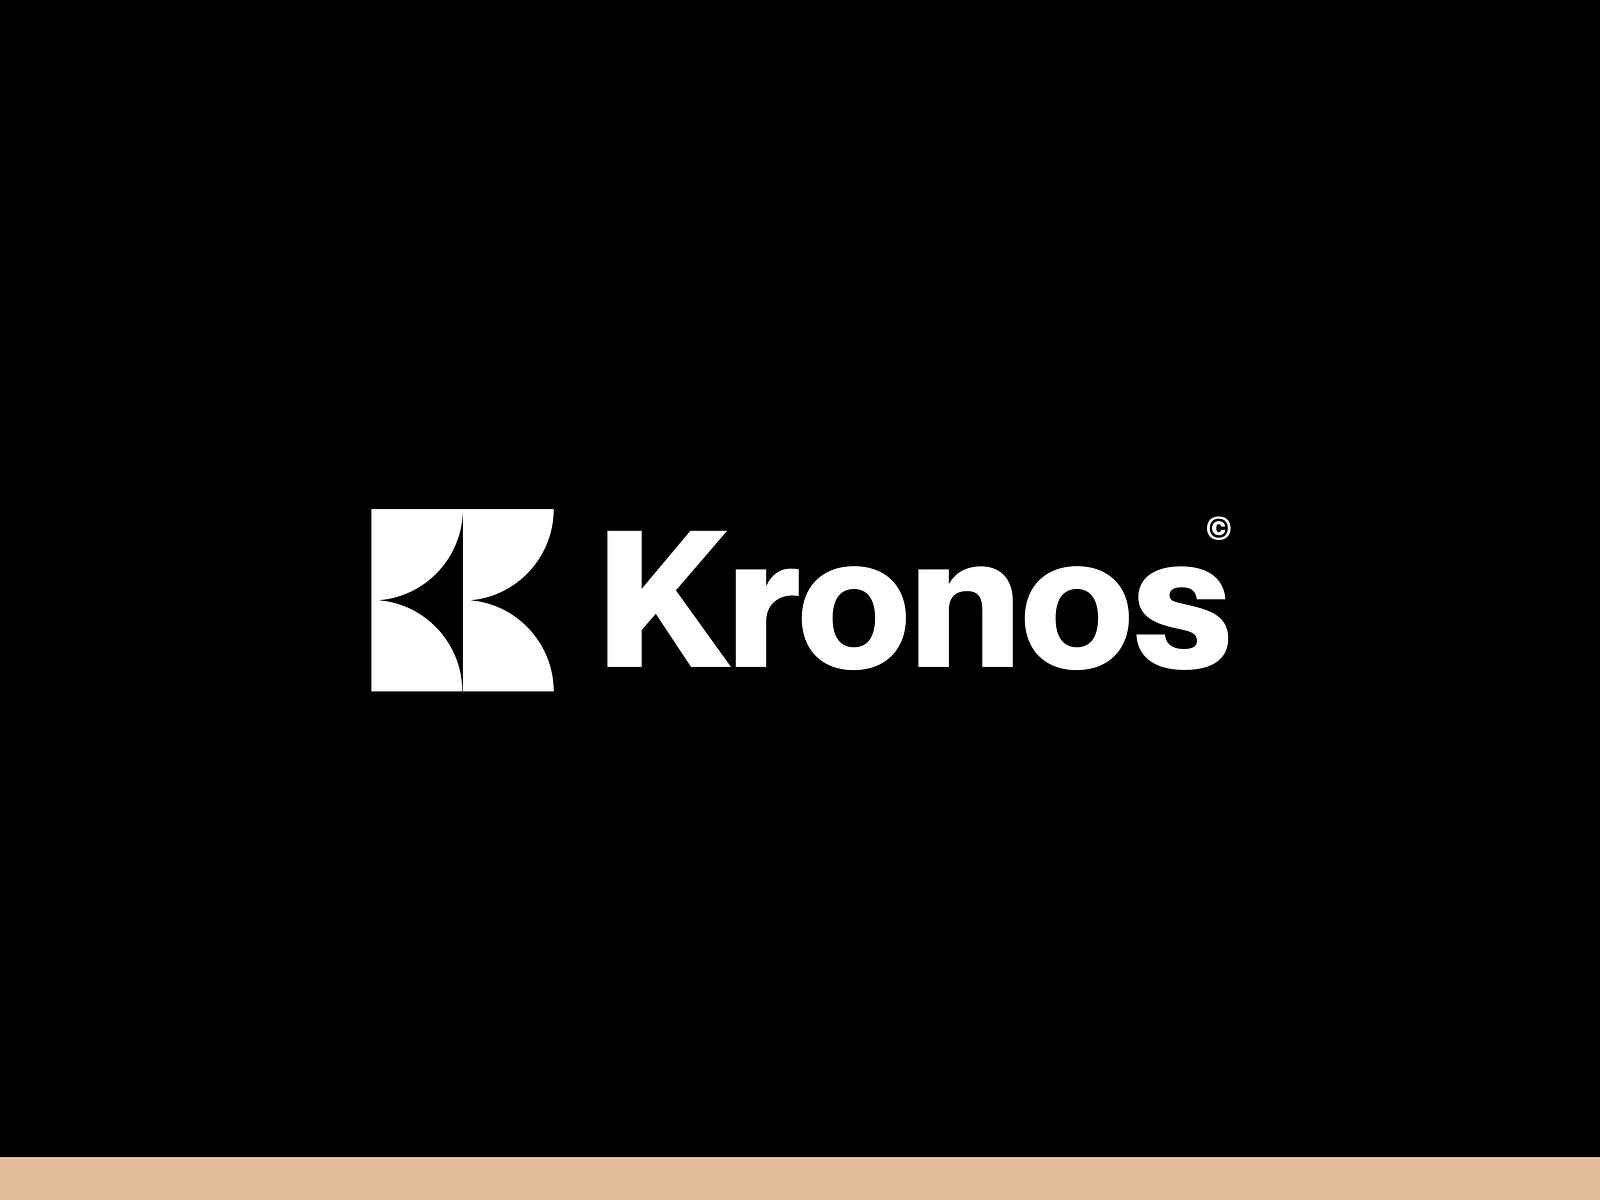 Kronos Brand Identity by Manuel Segura on Dribbble